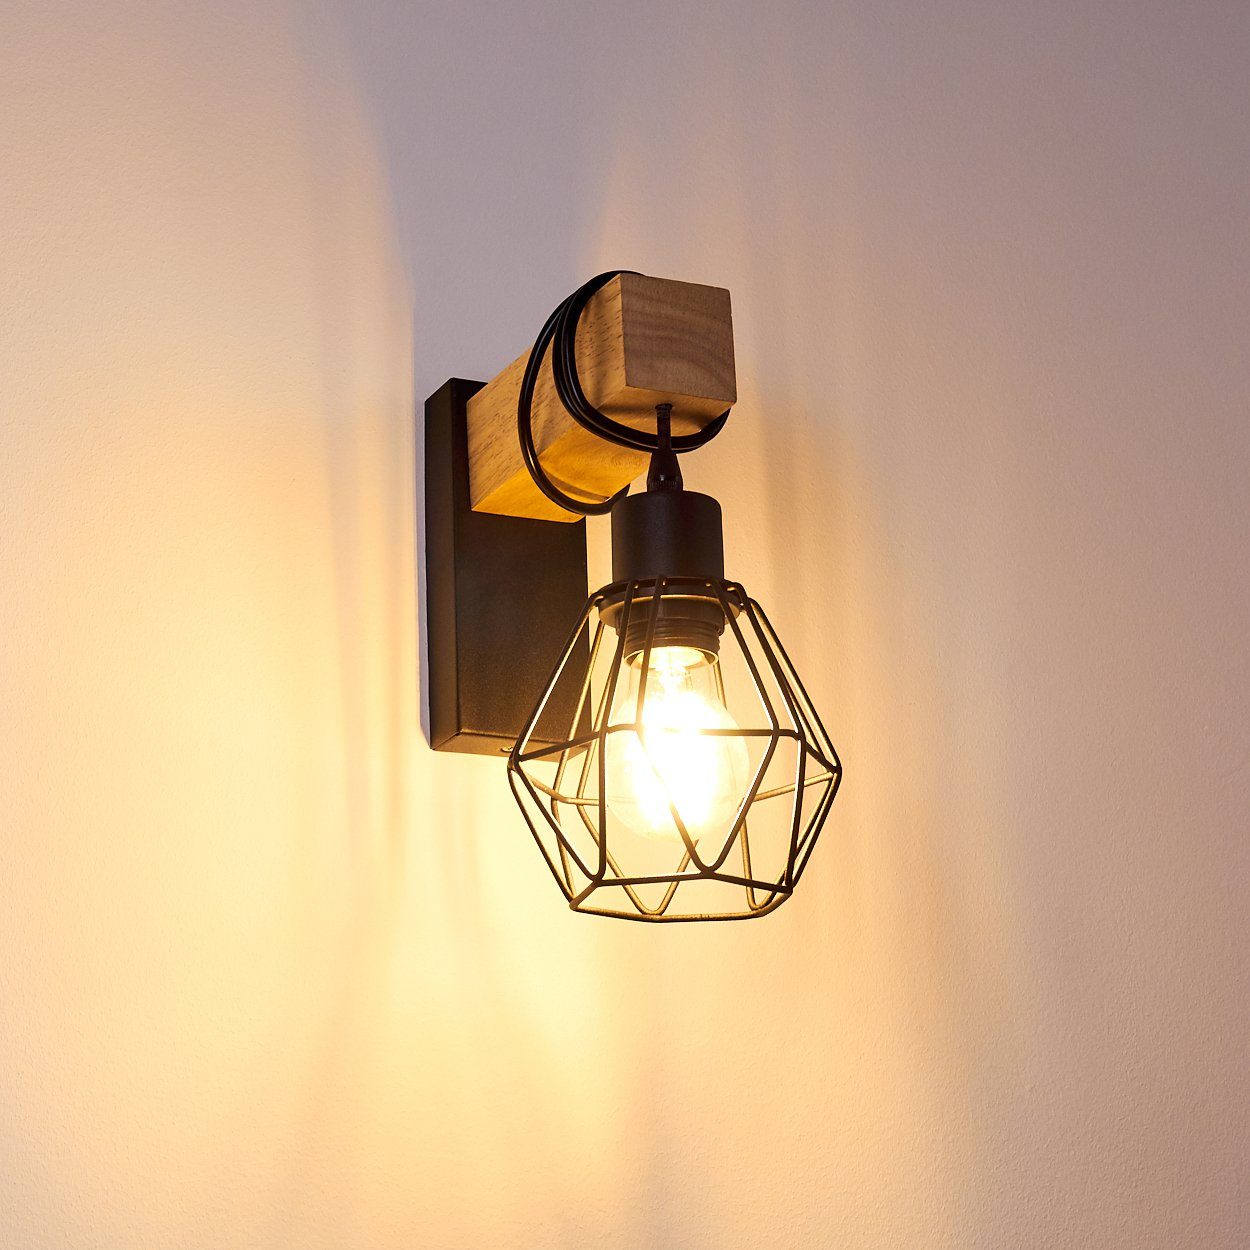 hofstein Wandleuchte Vintage Wohn Schlaf Beleuchtung Lampen Wand Flur Holz/schwarz Zimmer